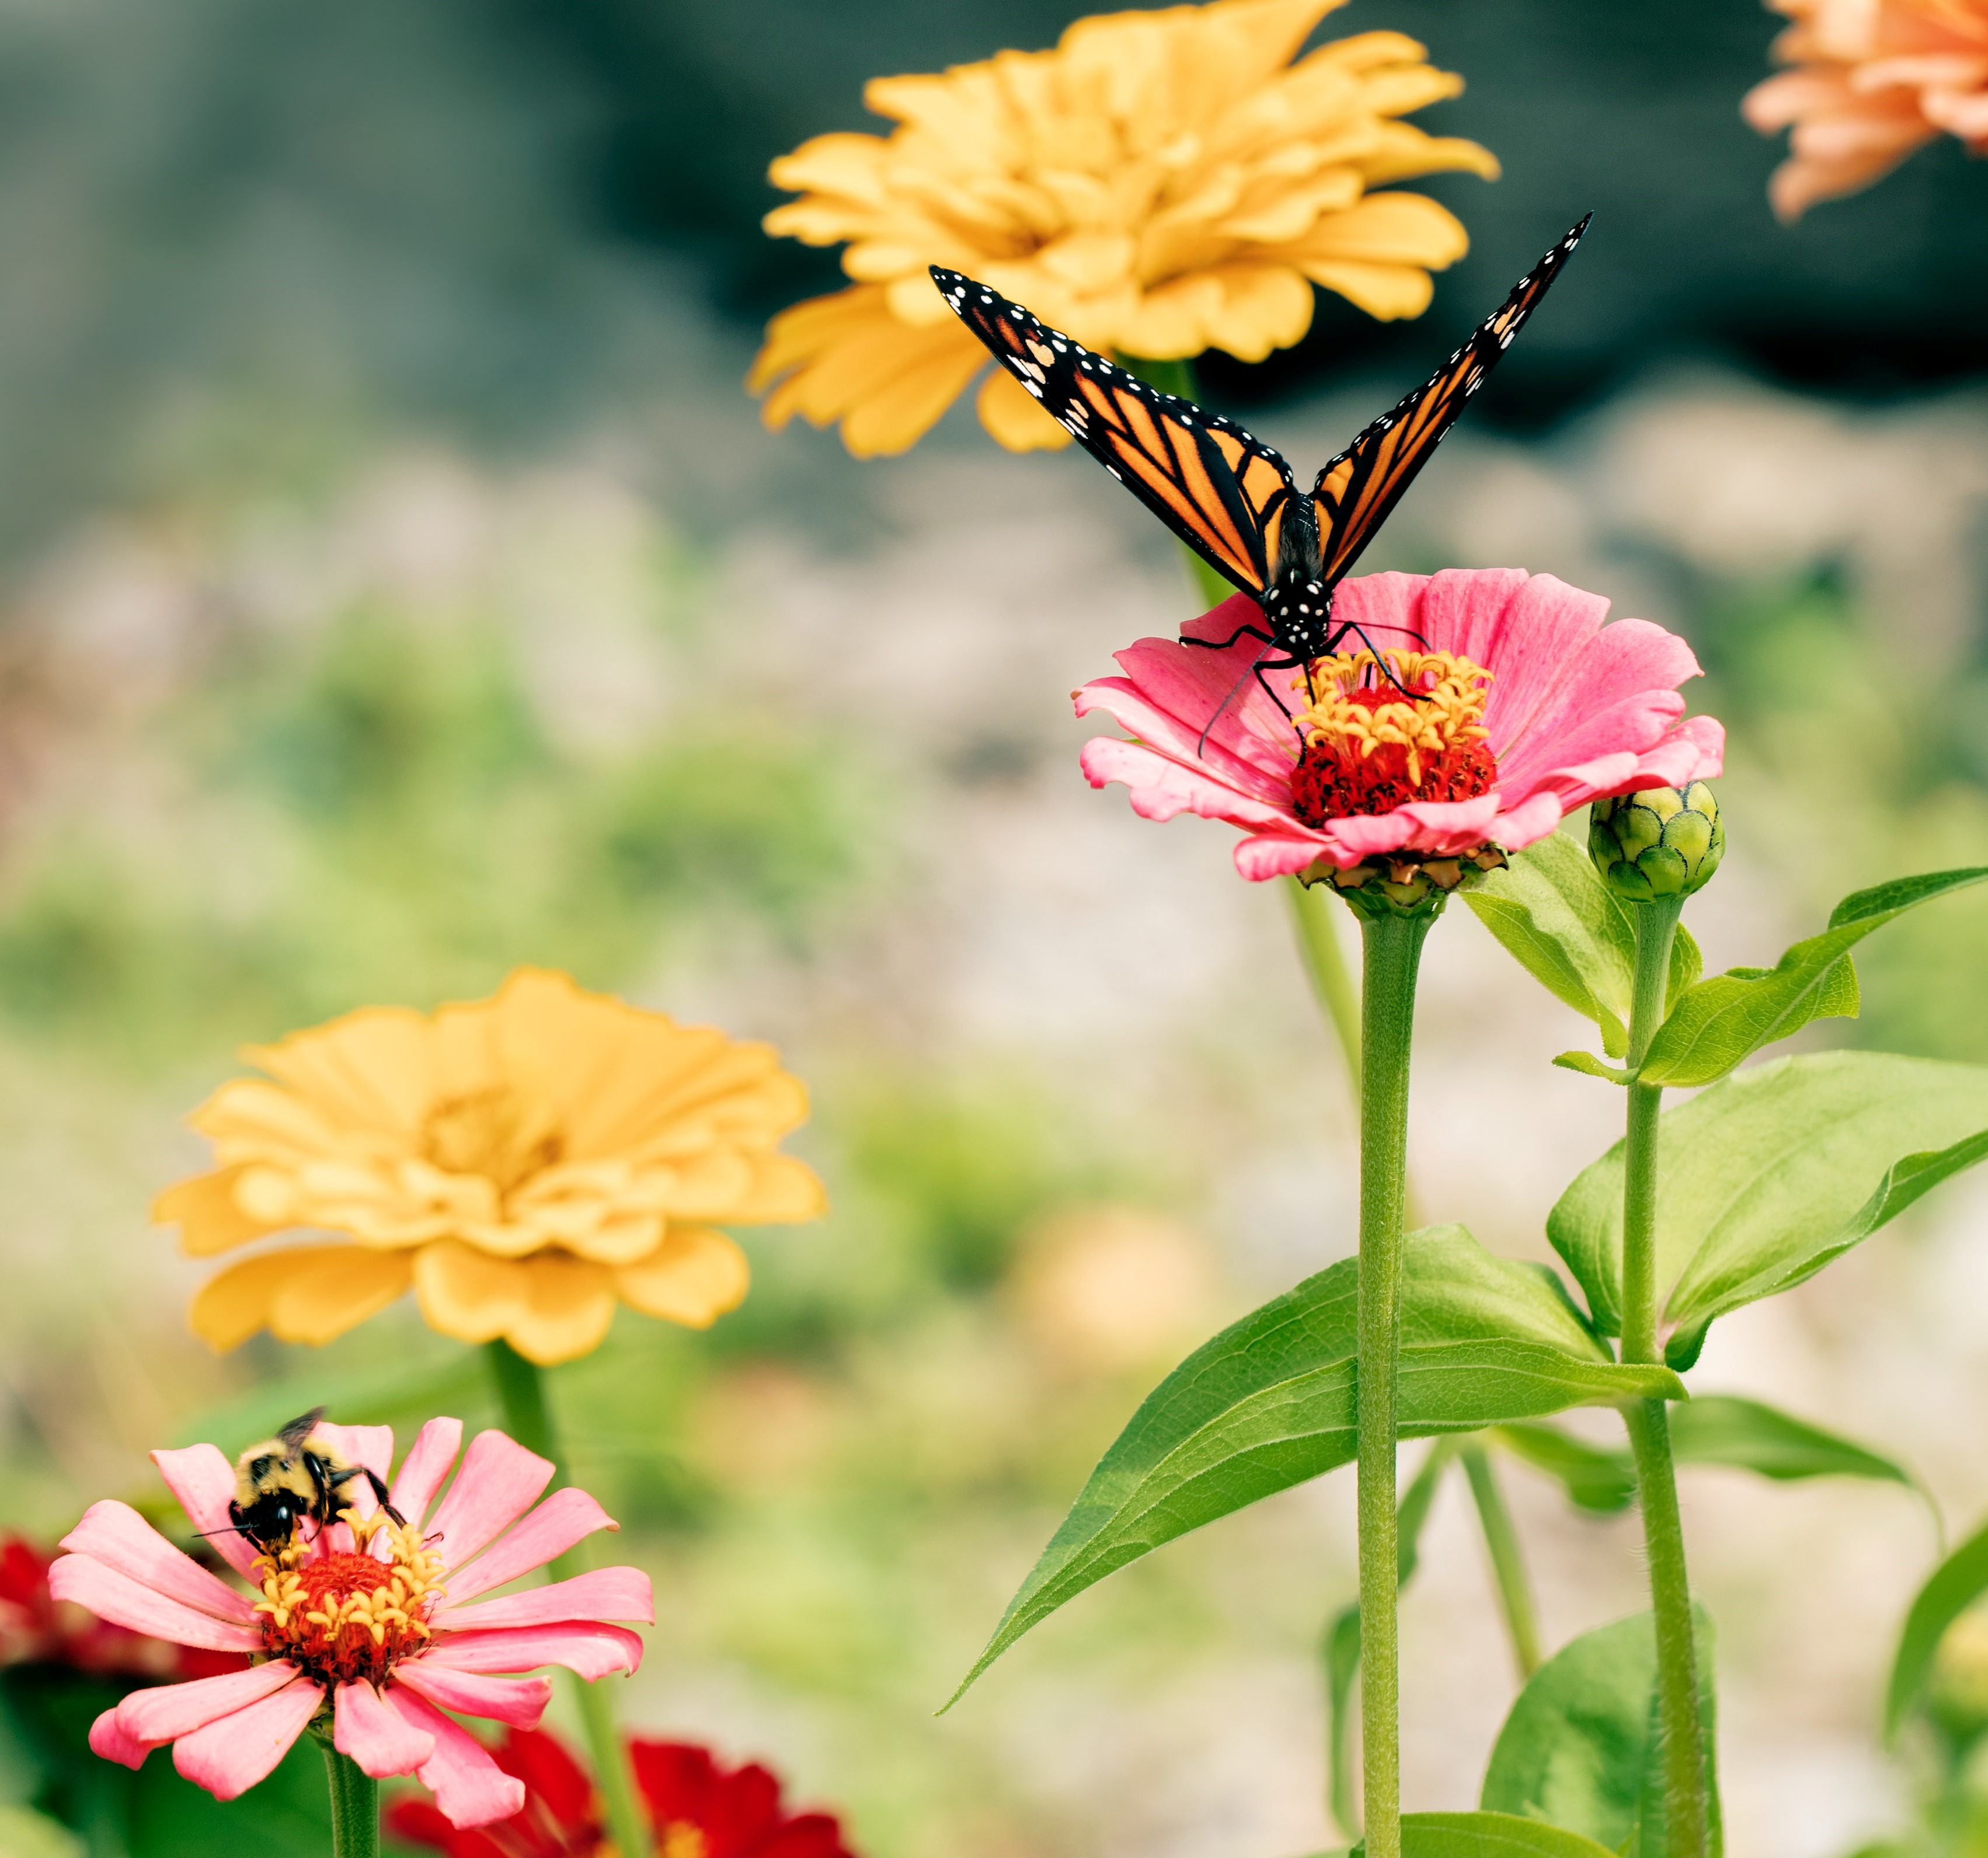 Butterfly and bee in flower garden